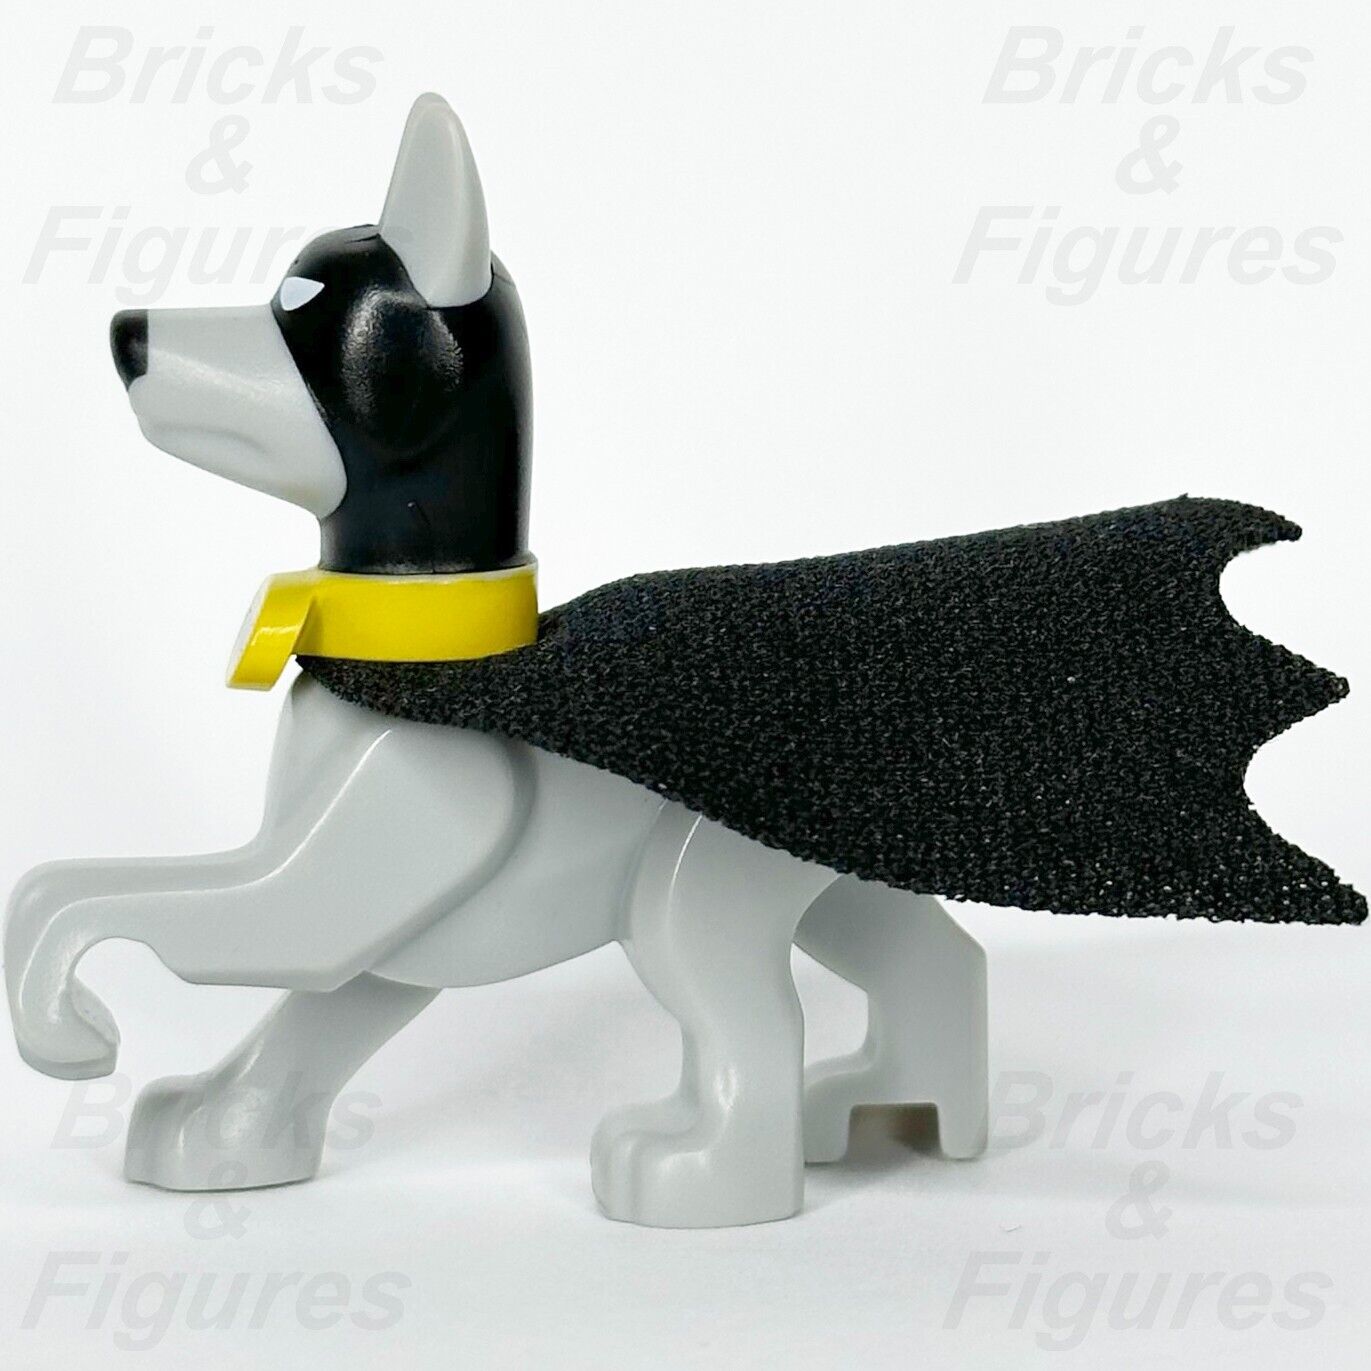 LEGO DC Super Heroes Ace the Bat-Hound Minifigure Dog Batman 2 76110 30533c02 4